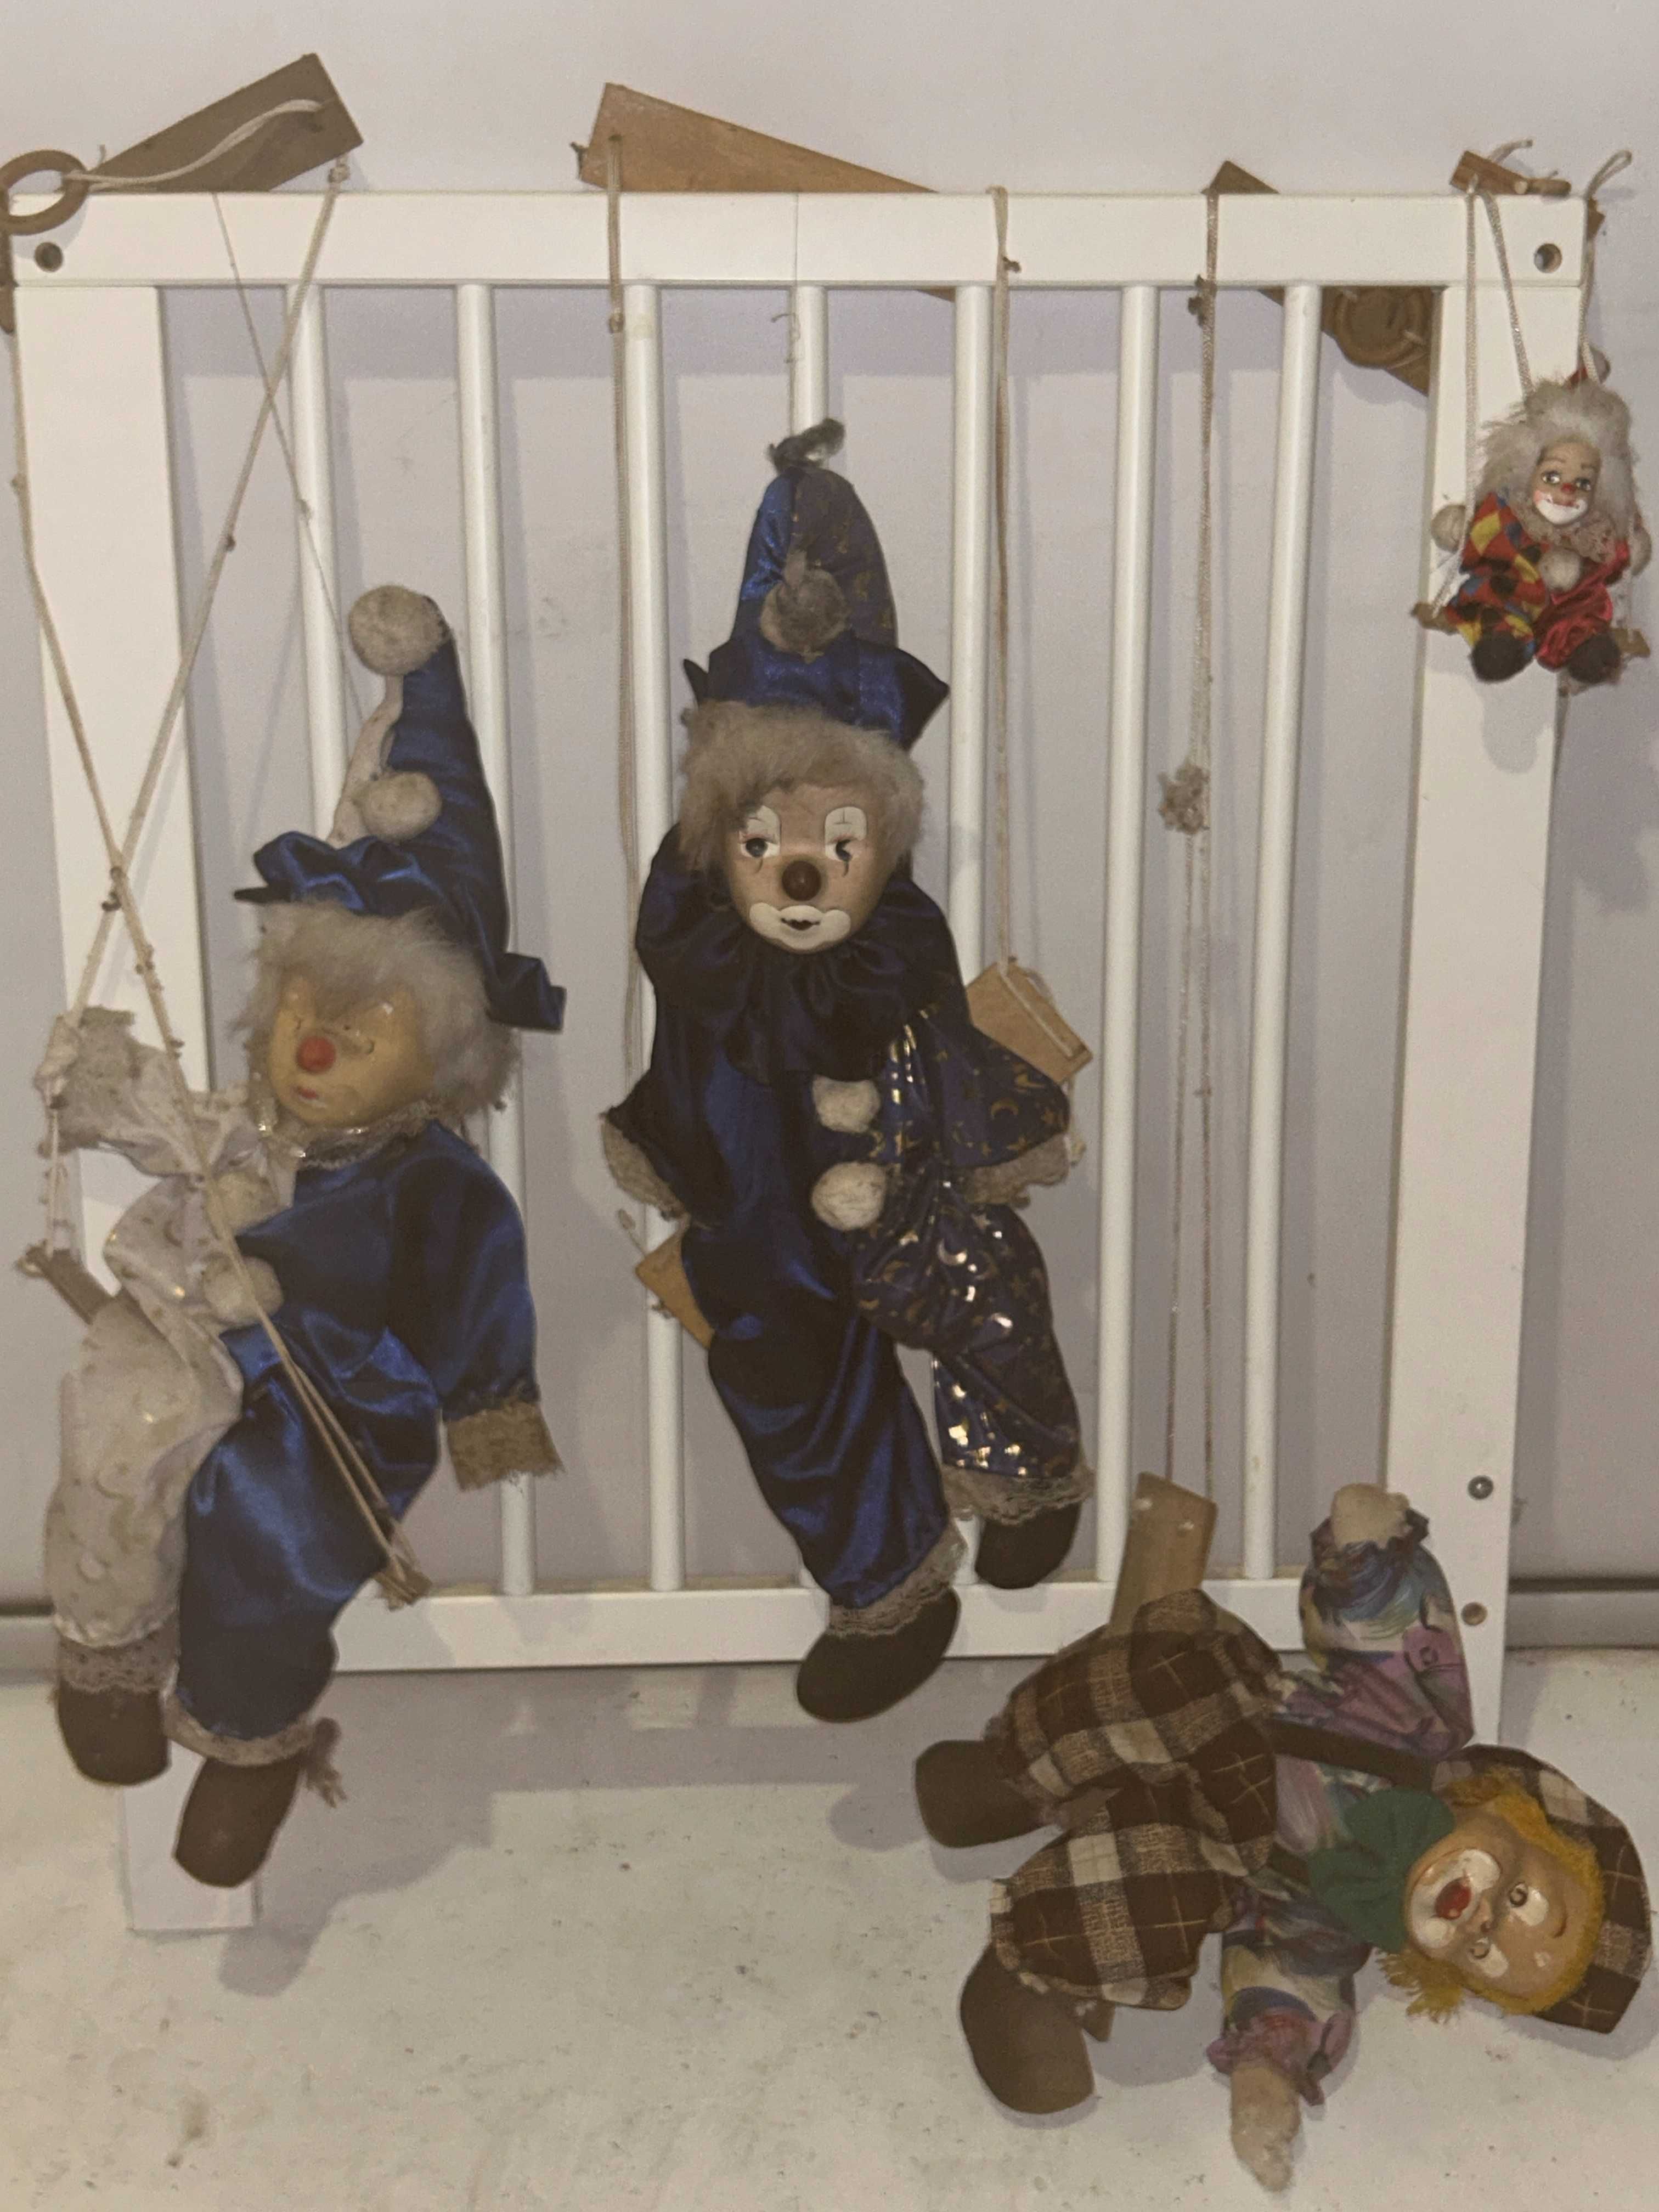 Lalka Ceramiczna,Marionetka KLAUN na sznurku - 4 sztuki